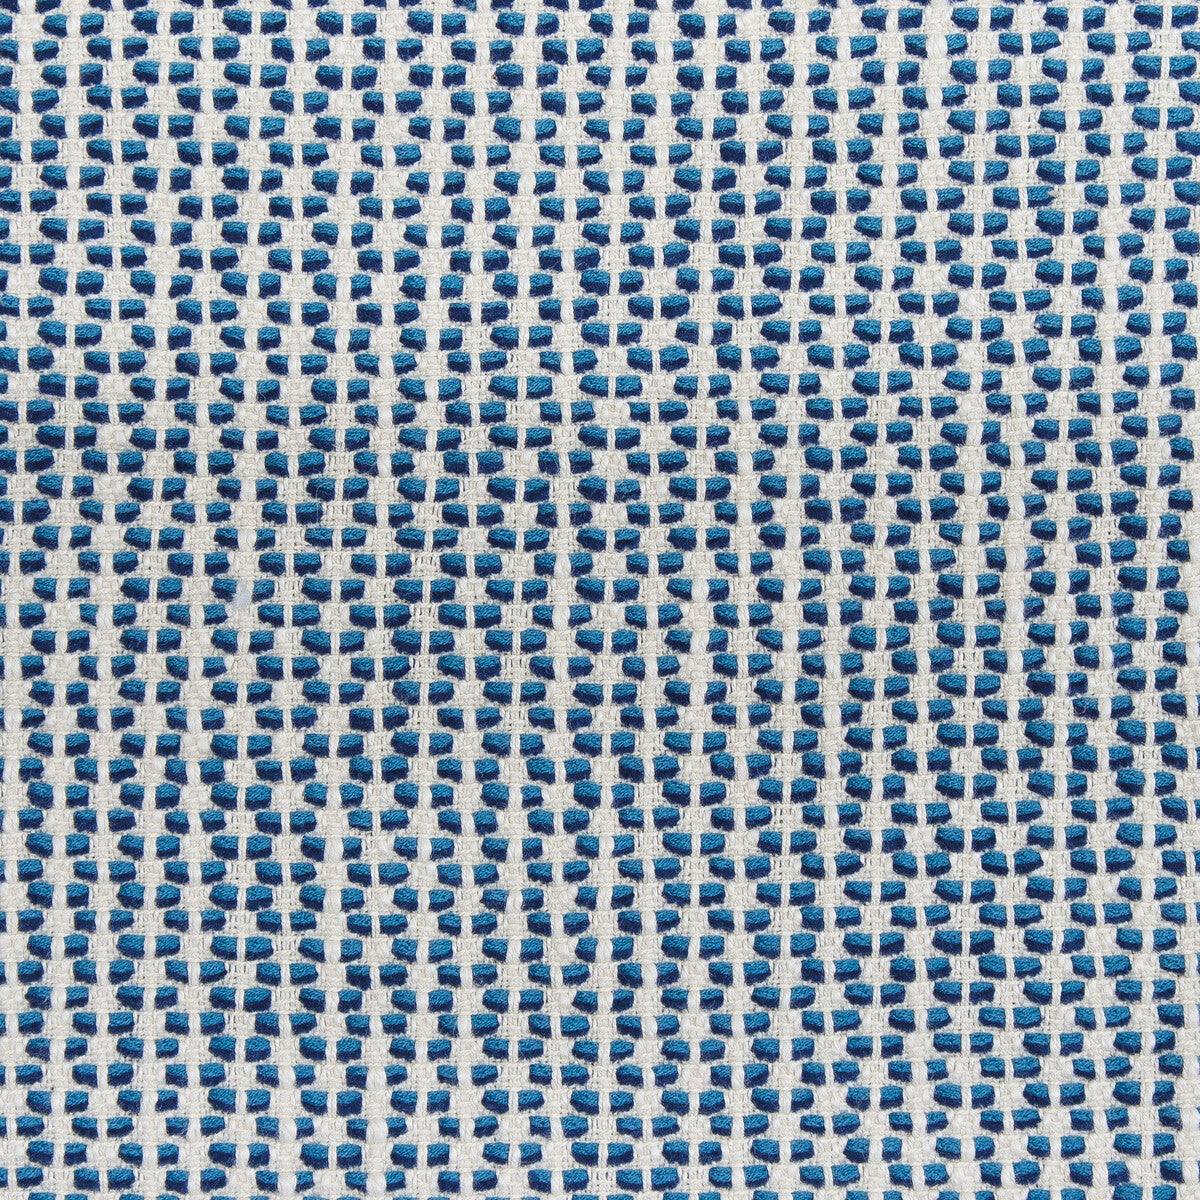 Palenque fabric in azul color - pattern GDT5595.002.0 - by Gaston y Daniela in the Gaston Nuevo Mundo collection